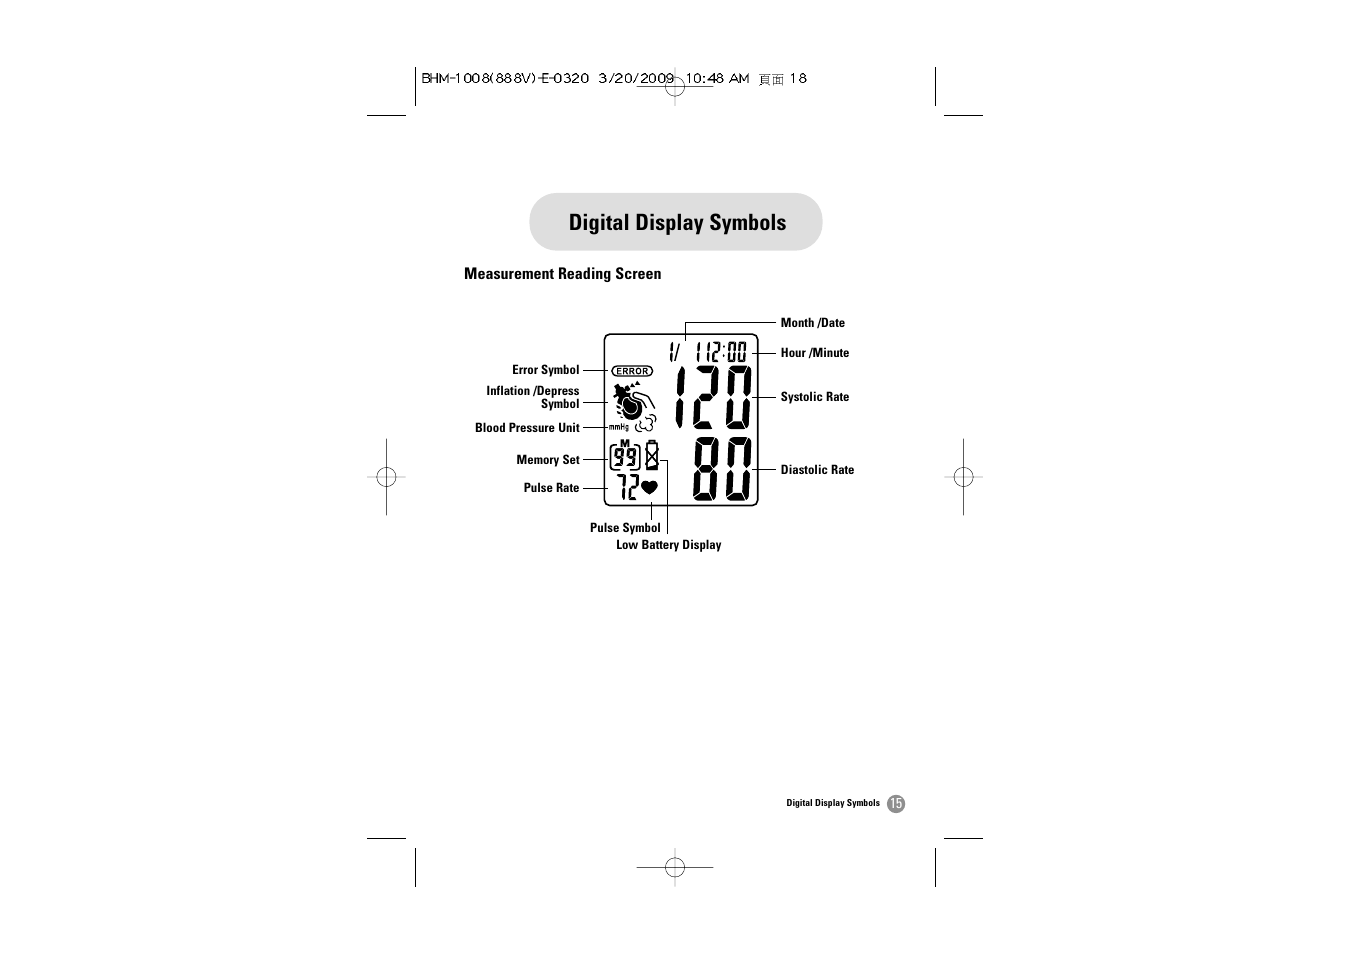 Digital display symbols | Samsung BHM-1008 User Manual | Page 16 / 66